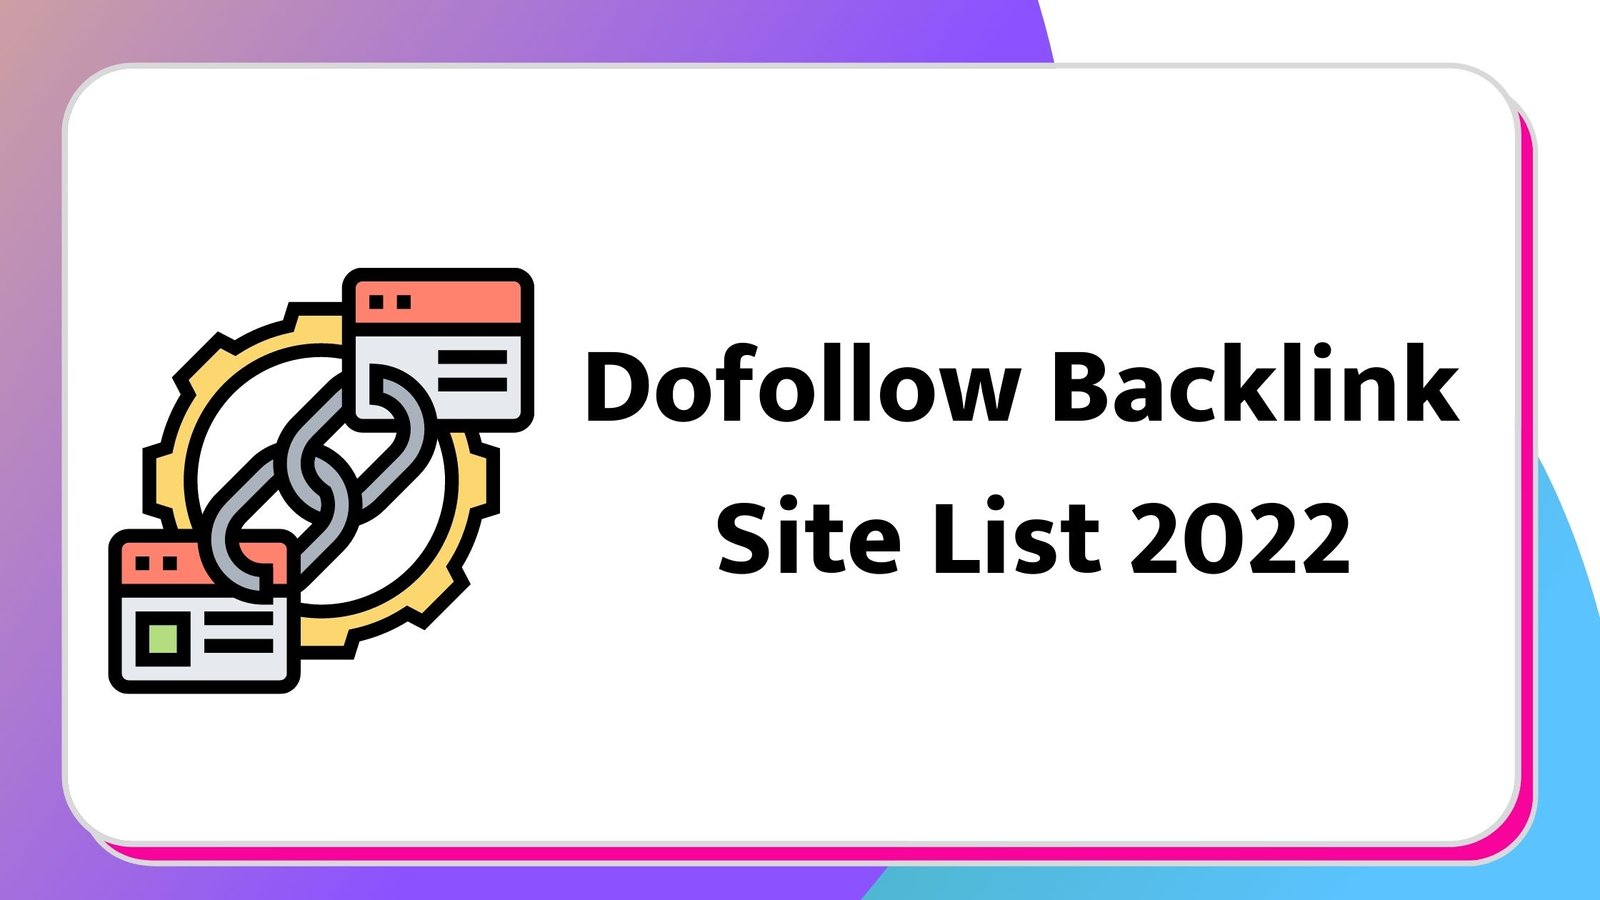 Dofollow Backlink Site List 2022